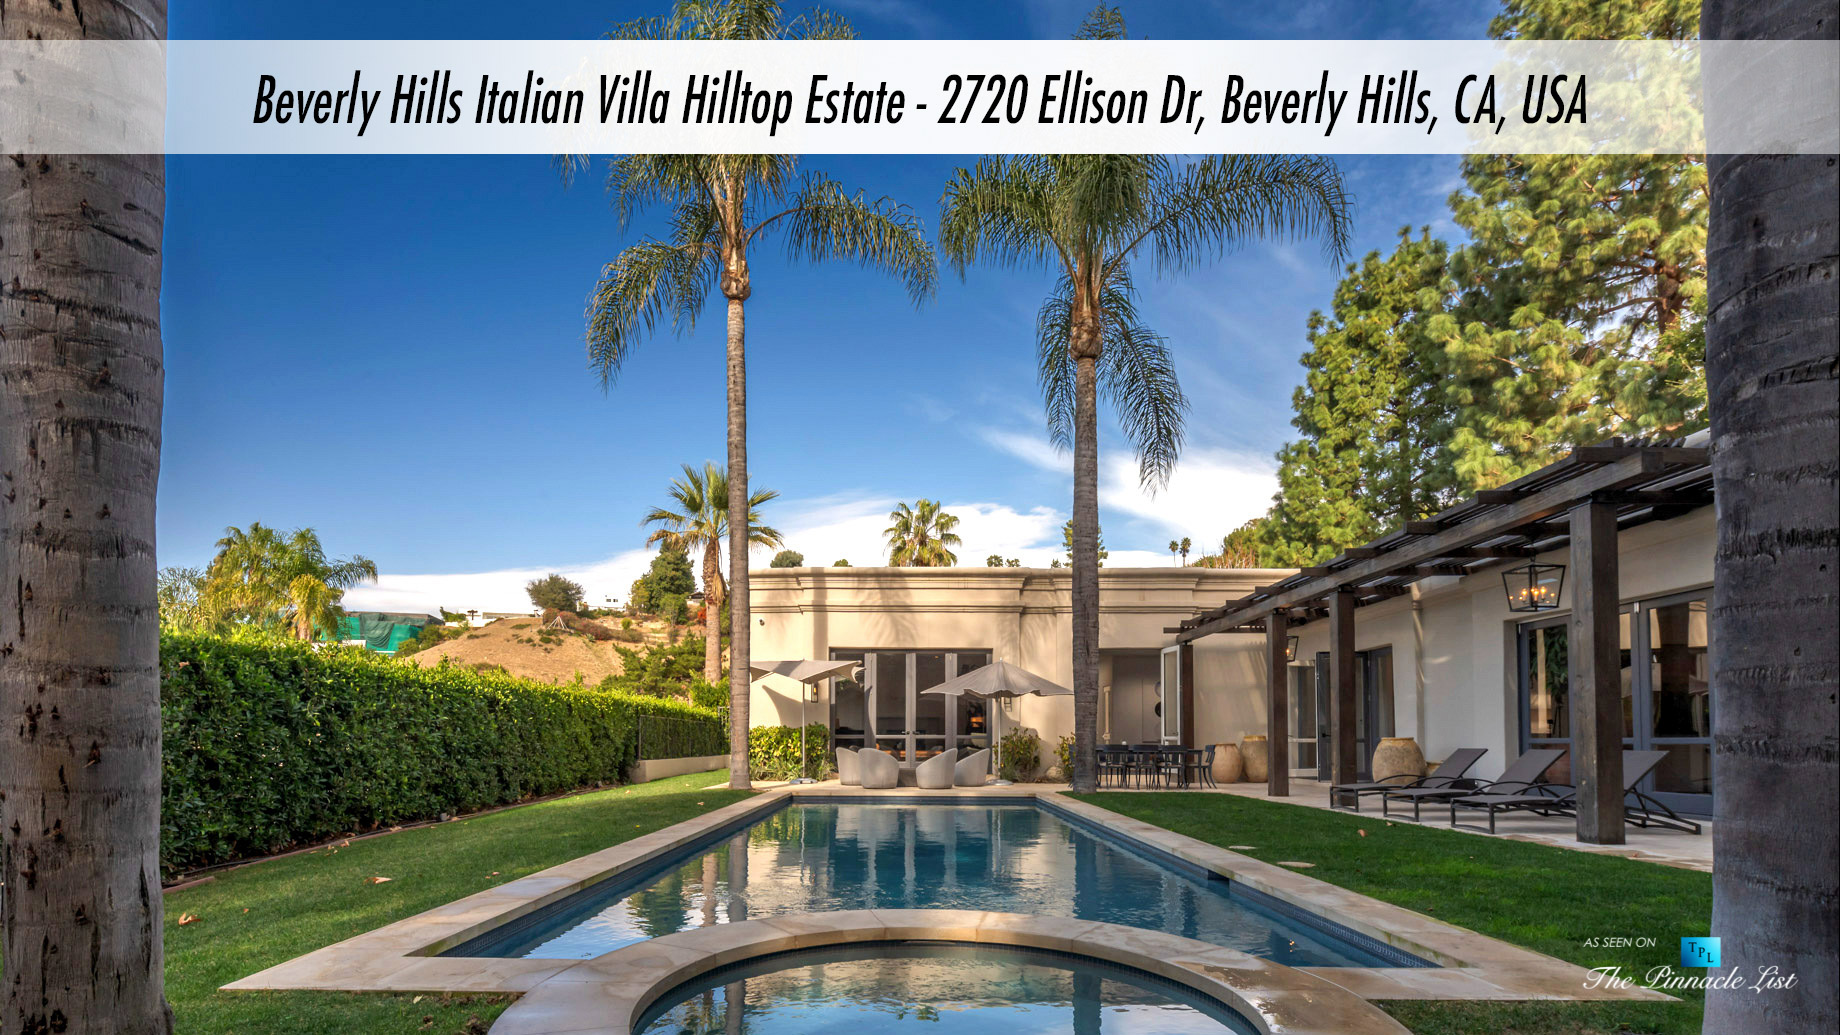 Beverly Hills Italian Villa Hilltop Estate - 2720 Ellison Dr, Beverly Hills, CA, USA